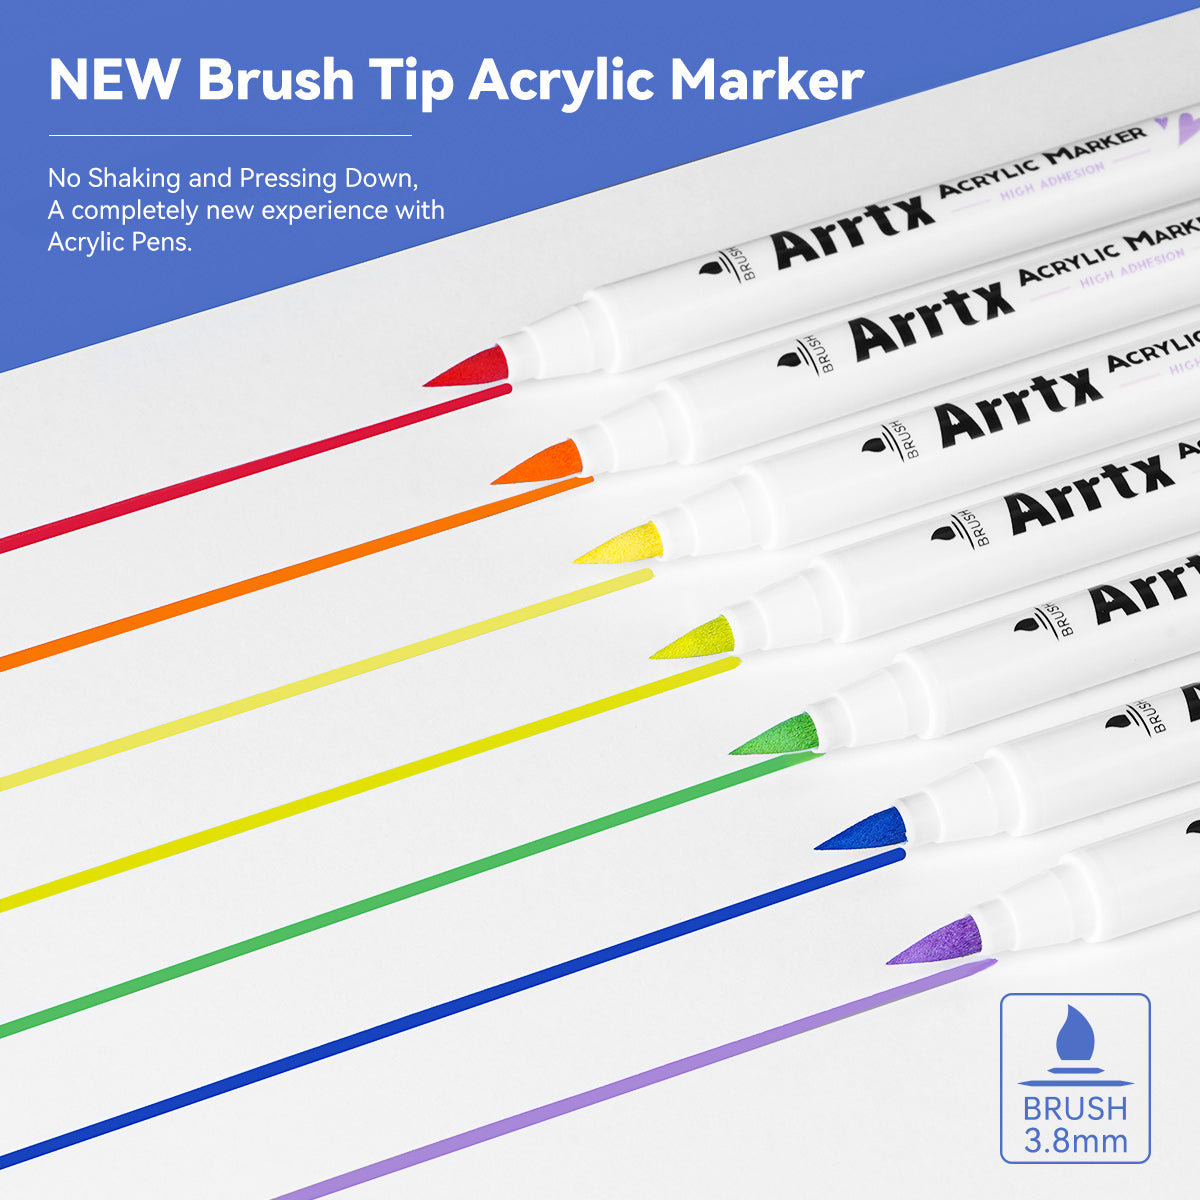 Arrtx 30 Farben Acrylfarbenstifte 30B Acrylmarker